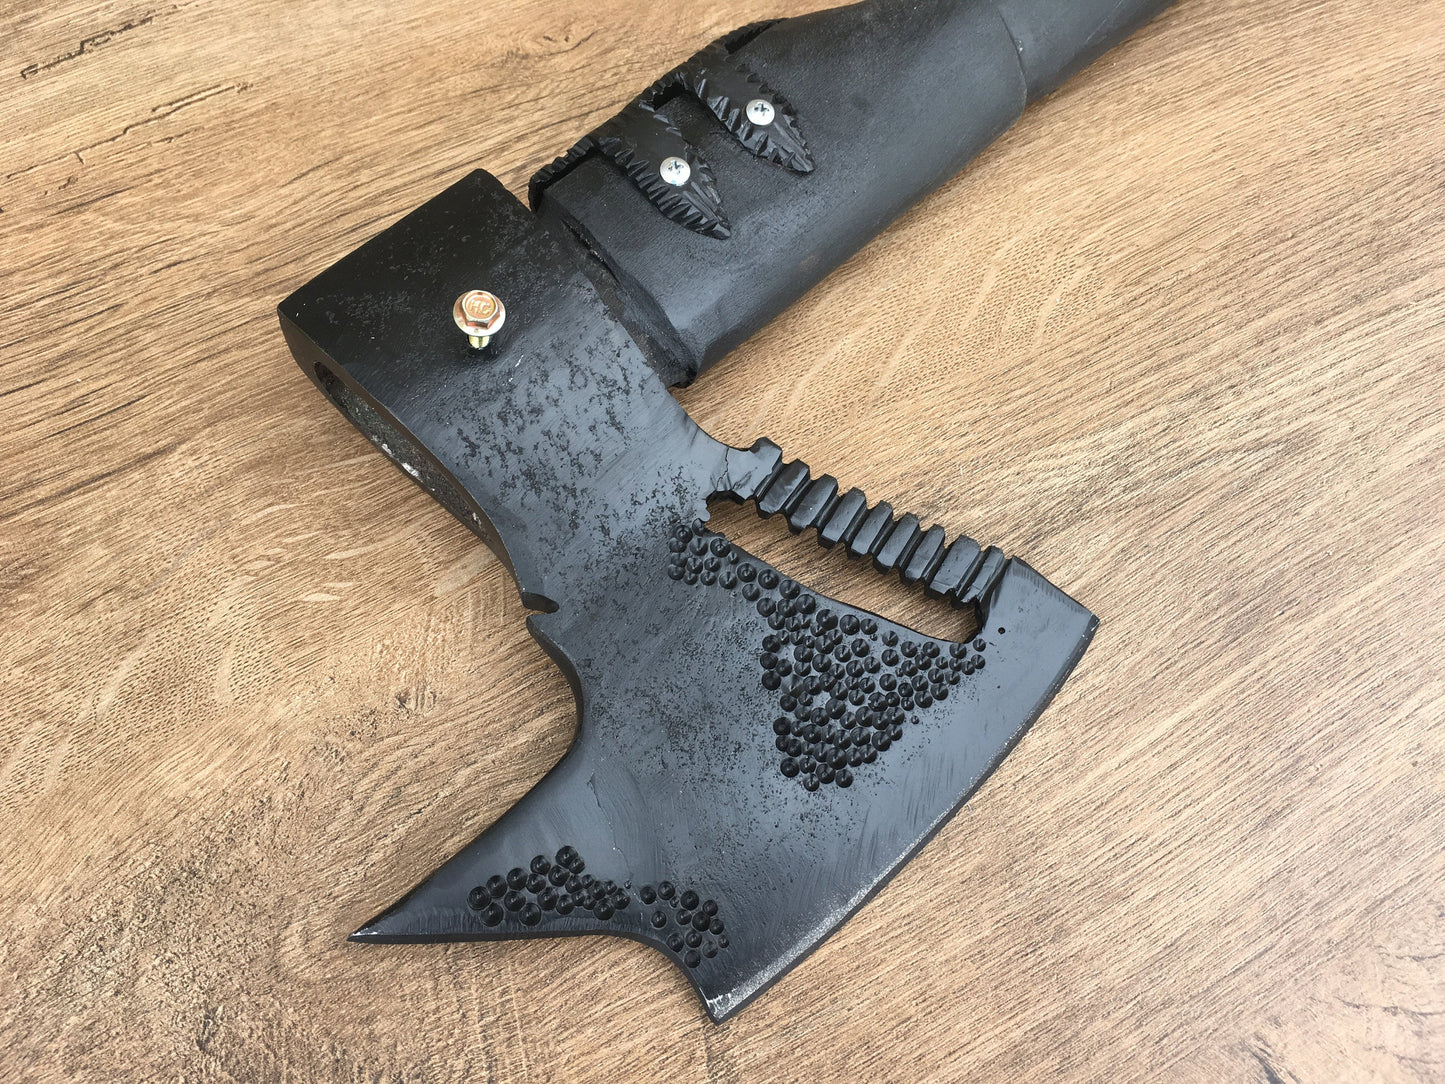 Viking axe, tomahawk, hatchet, viking, horror gift, axe charm, axe art, axe gift, axe and knife, his birthday gift,viking gift,stress relief